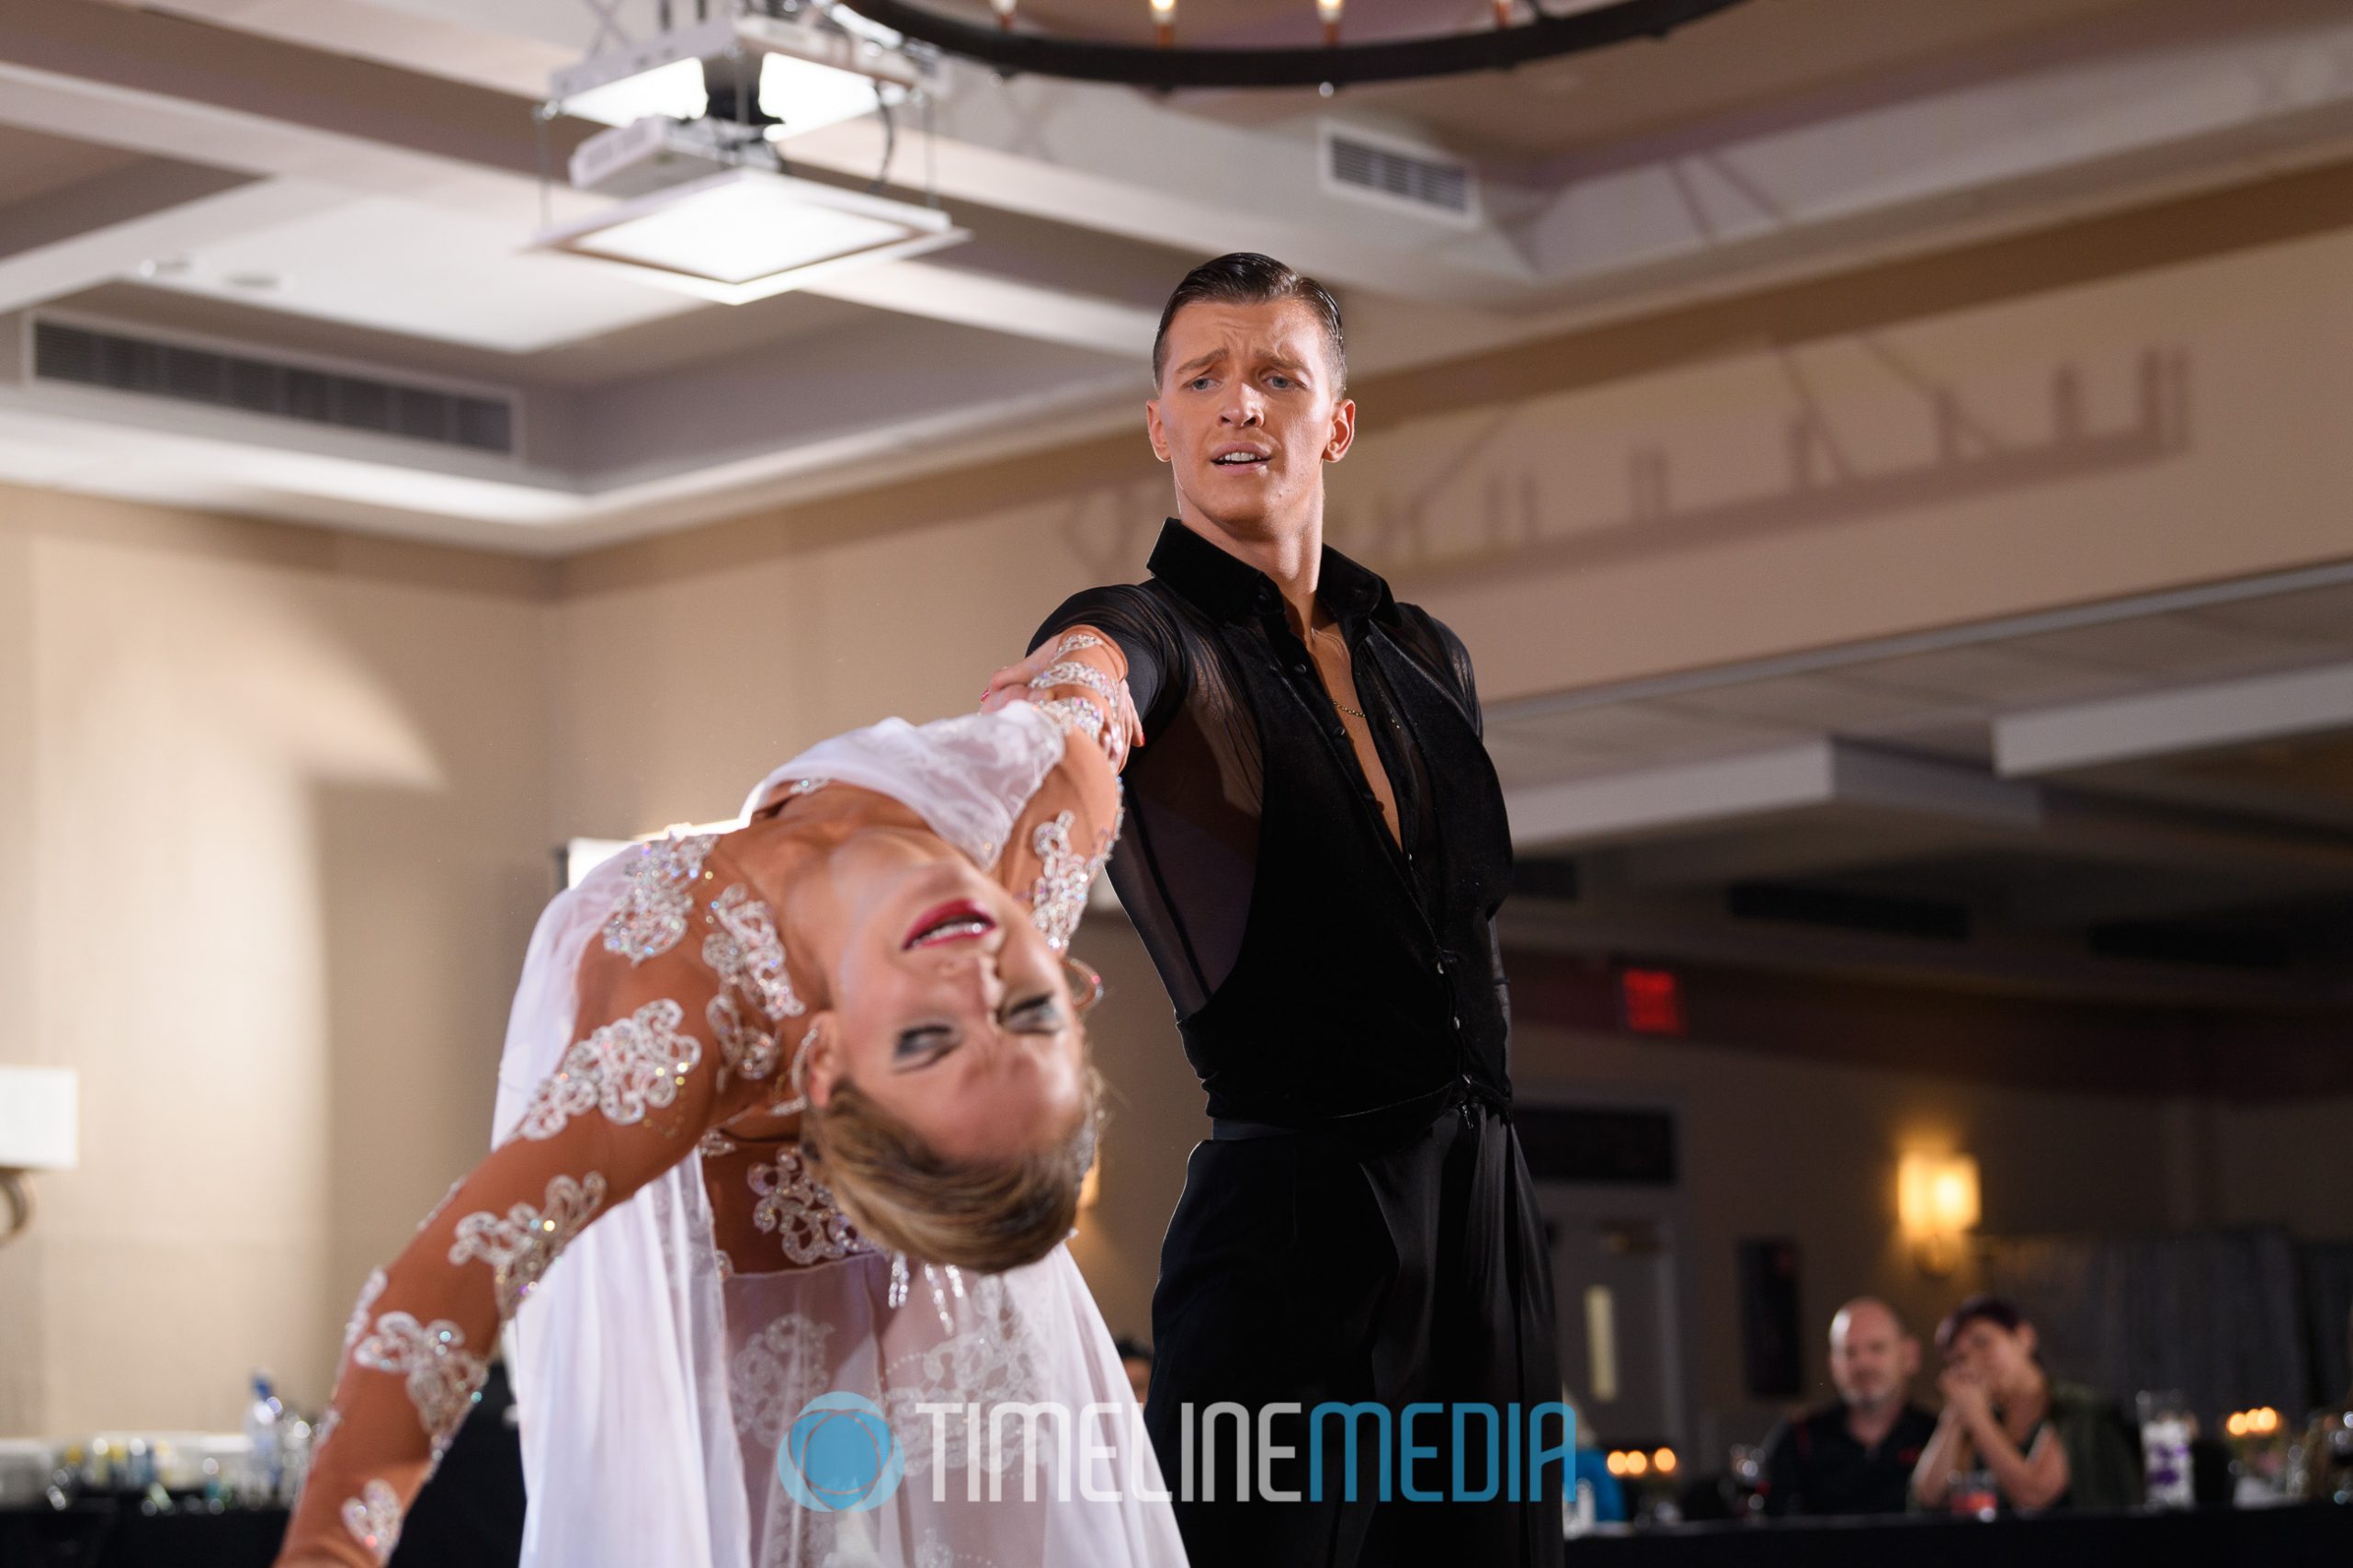 Mykyta Serdyuk and Anna Krasnoshapka dancing a professional show ©TimeLine Media